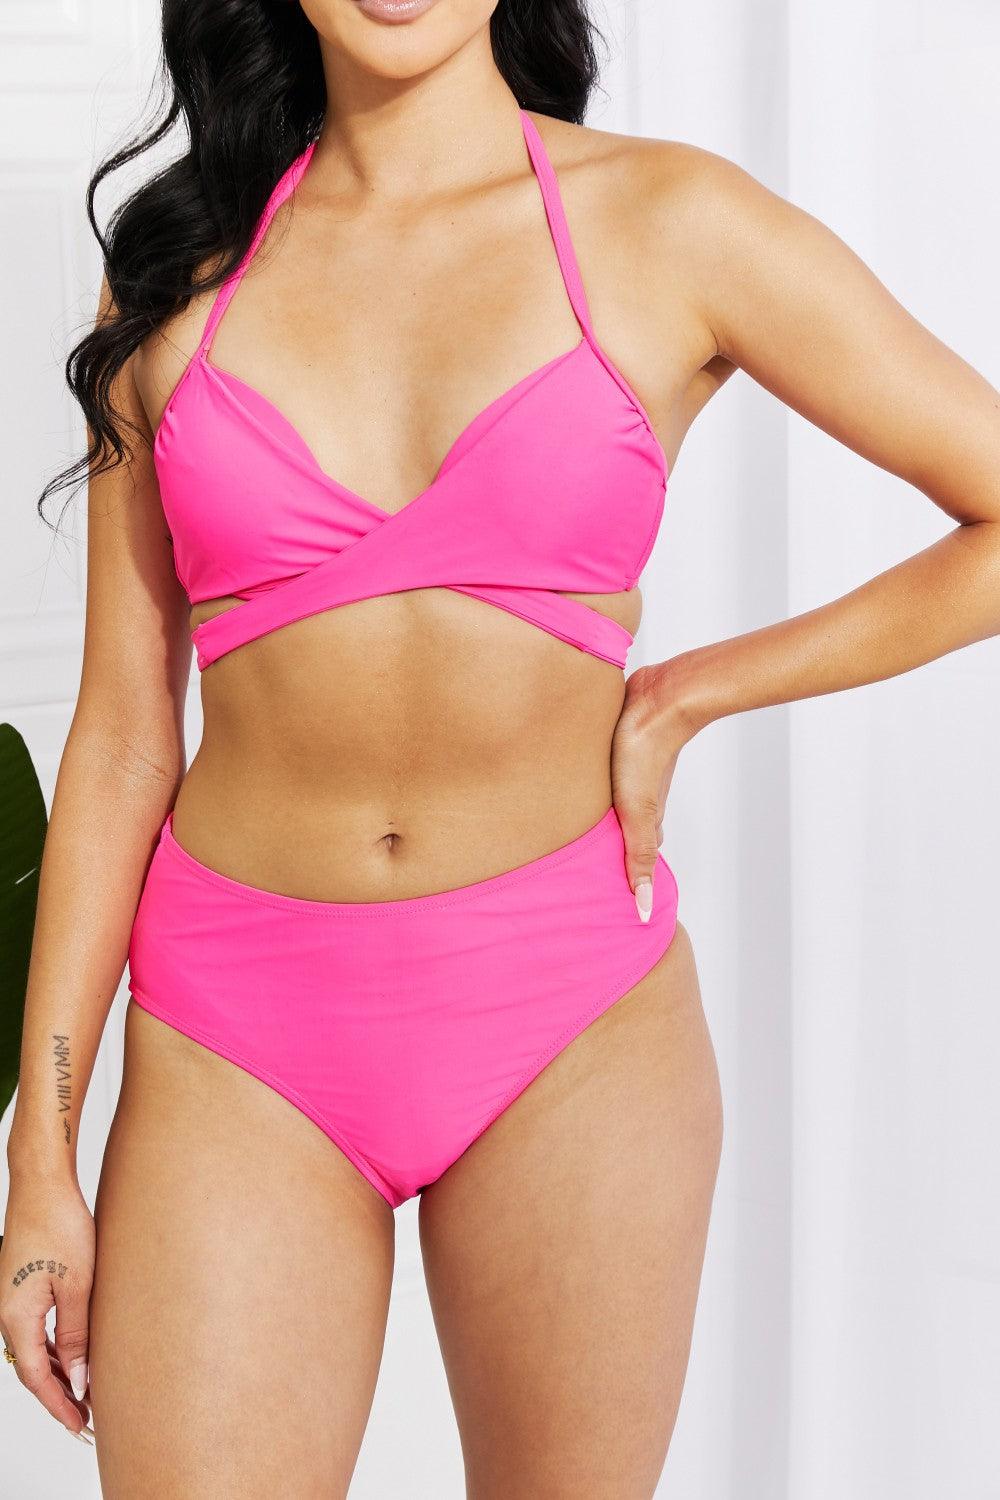 Marina West Swim Summer Splash Halter Bikini Set in Pink - Glamorous Boutique USA L.L.C.